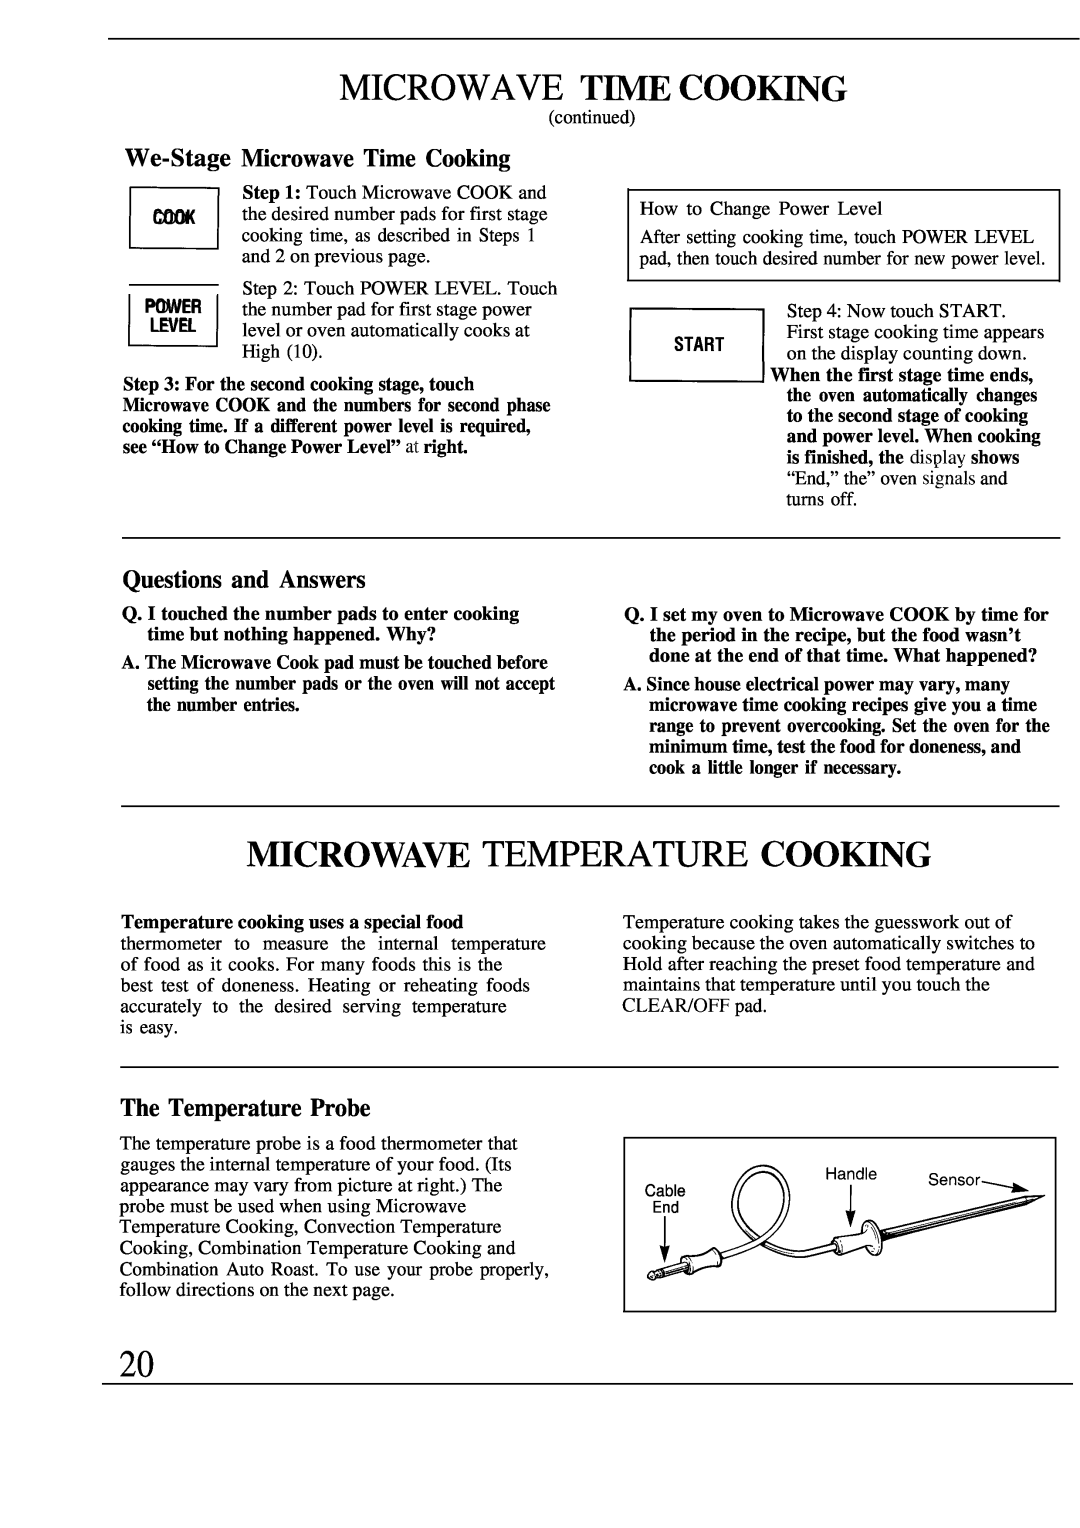 GE Monogram JET343G manual MICROWAVE TME COOmNG, MICROWAW TEMPERATURE COOmNG, We-Stage Microwave Time Cooking 